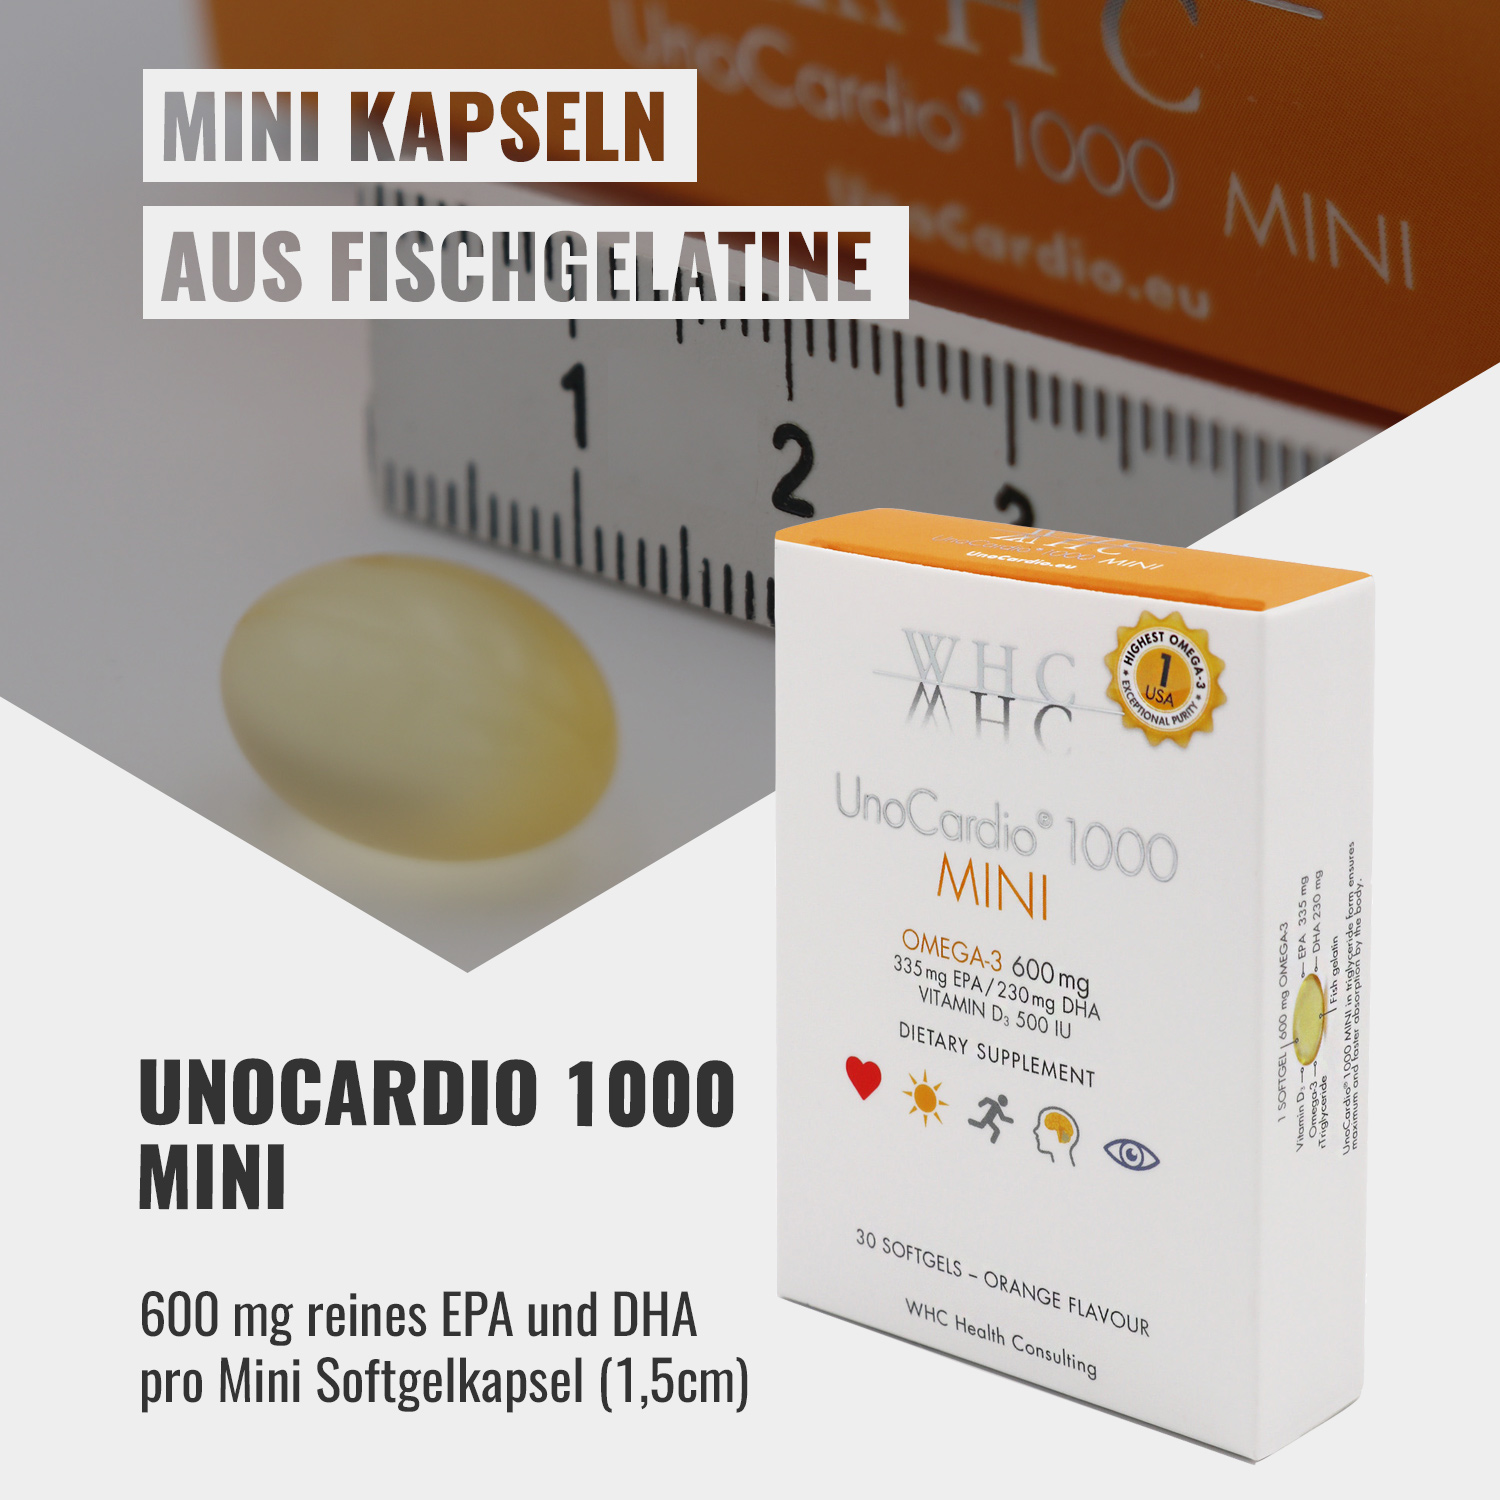 MINI KAPSELN AUS FISCHGELATINE | UnoCardio 1000 MINI - 600 mg reines EPA und DHA pro Mini Softgelkapsel (1,5 cm)